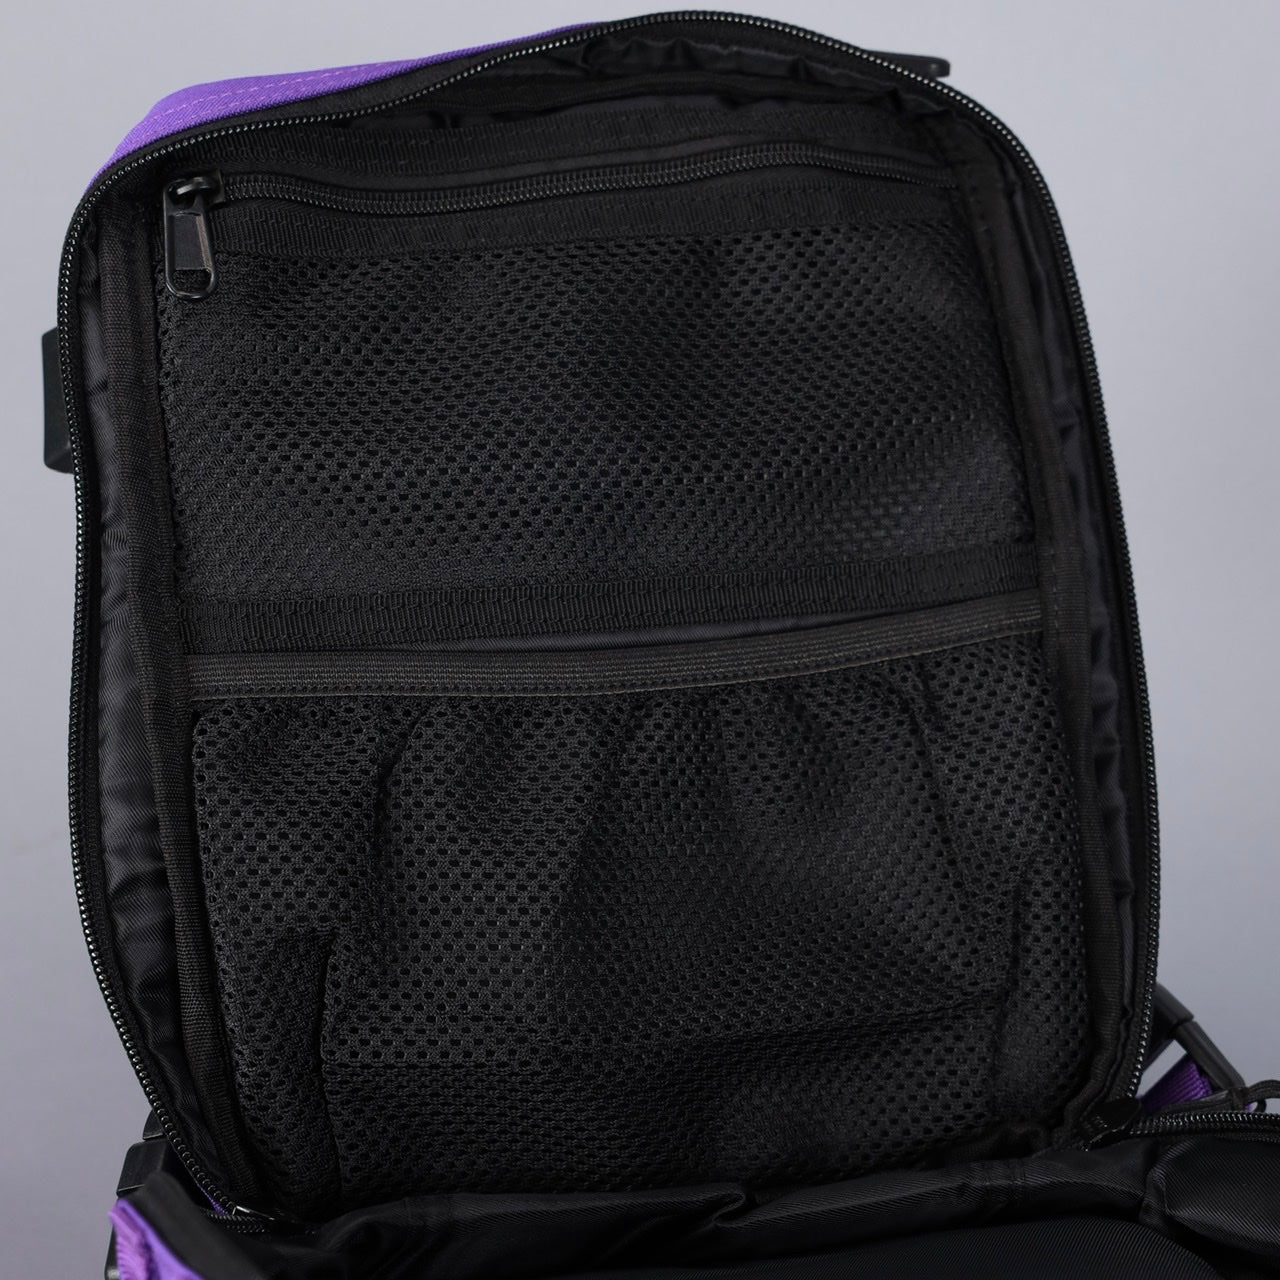 9L Backpack Mini Wolfsbane Purple